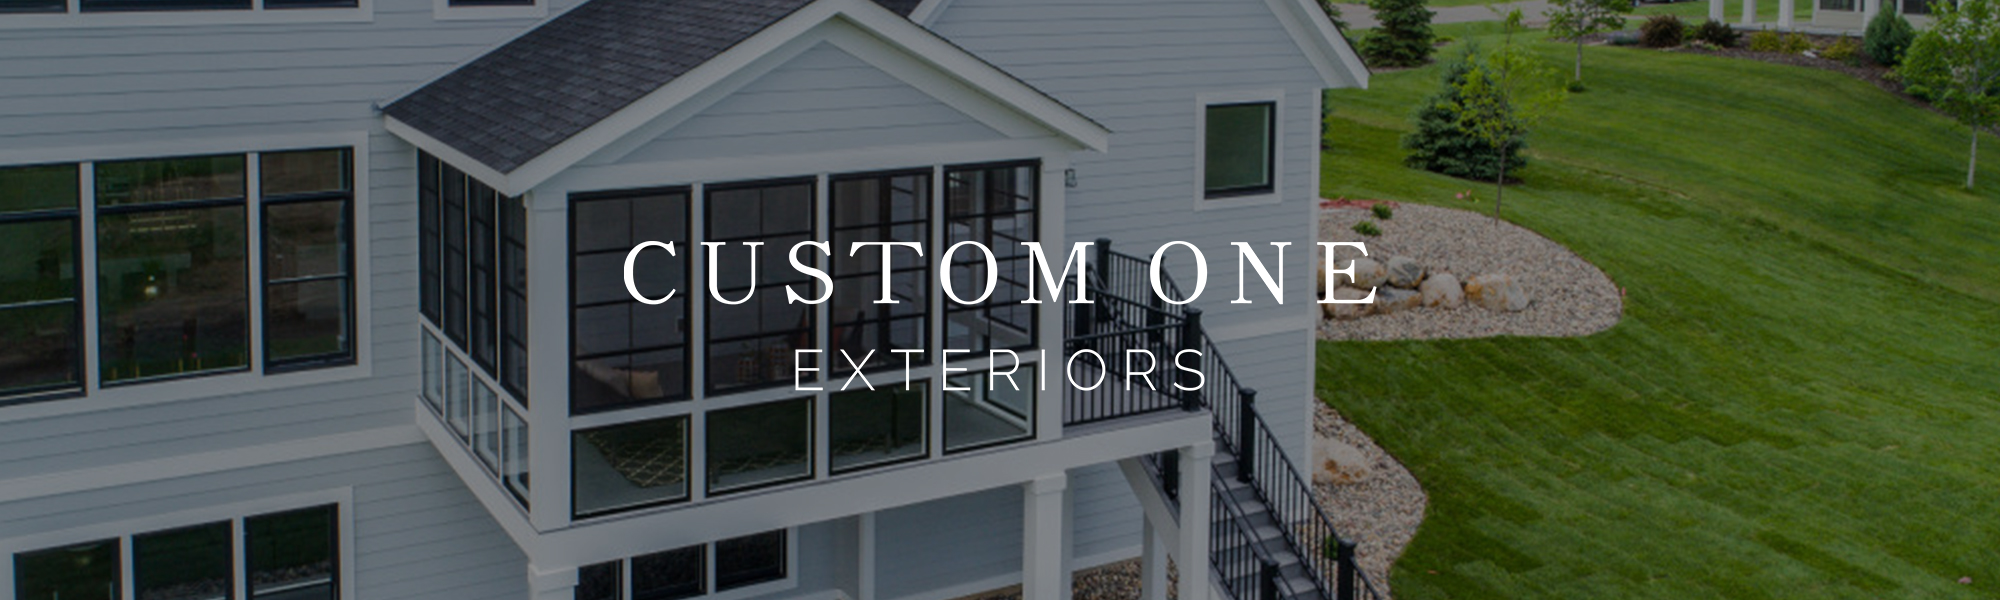 Custom One Exteriors - Siding Installation